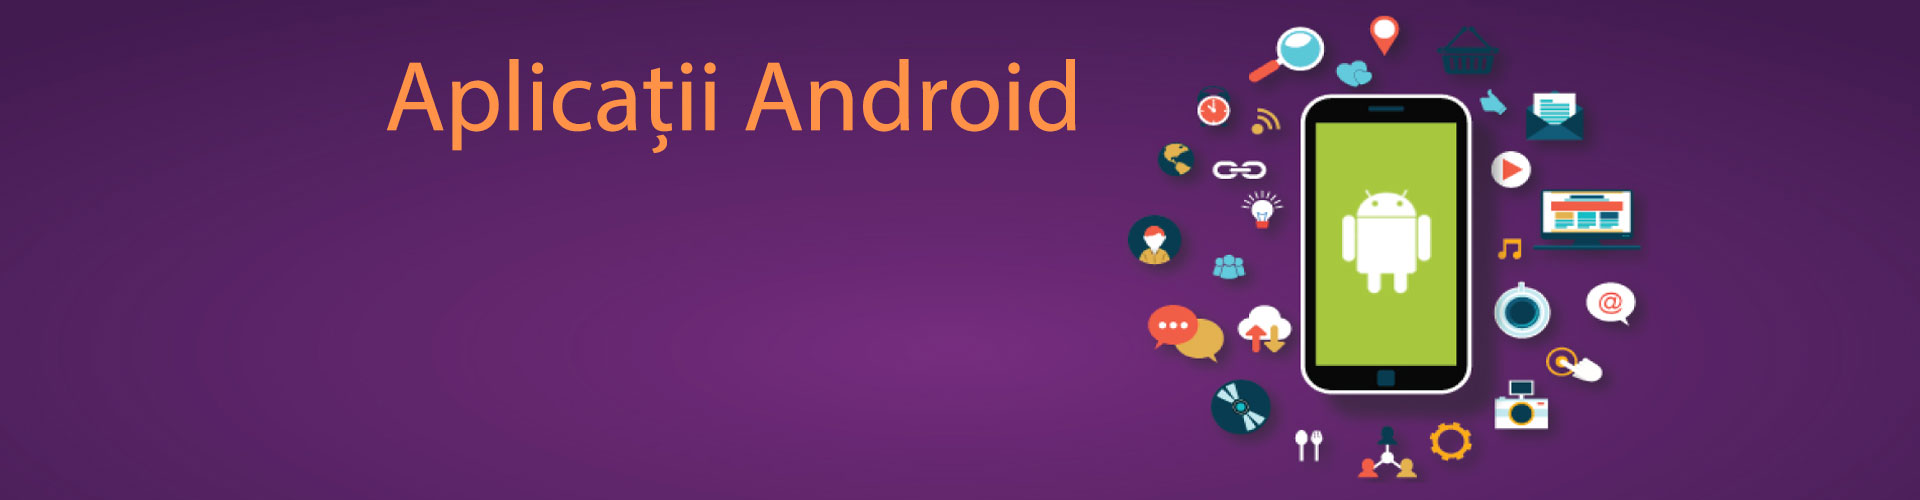 aplicatii android free